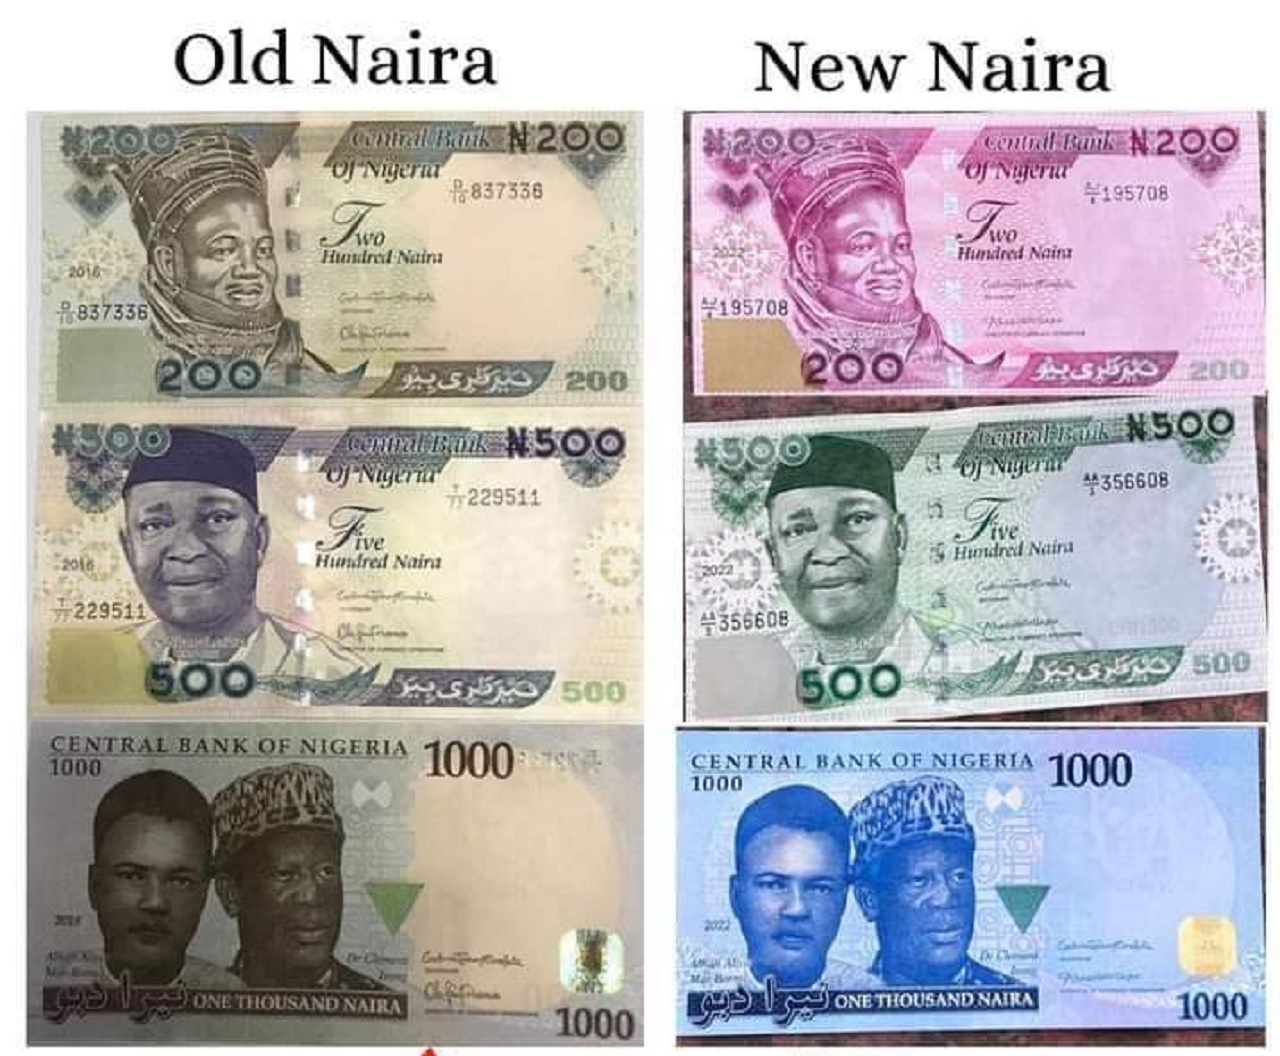 New and Old naira notes